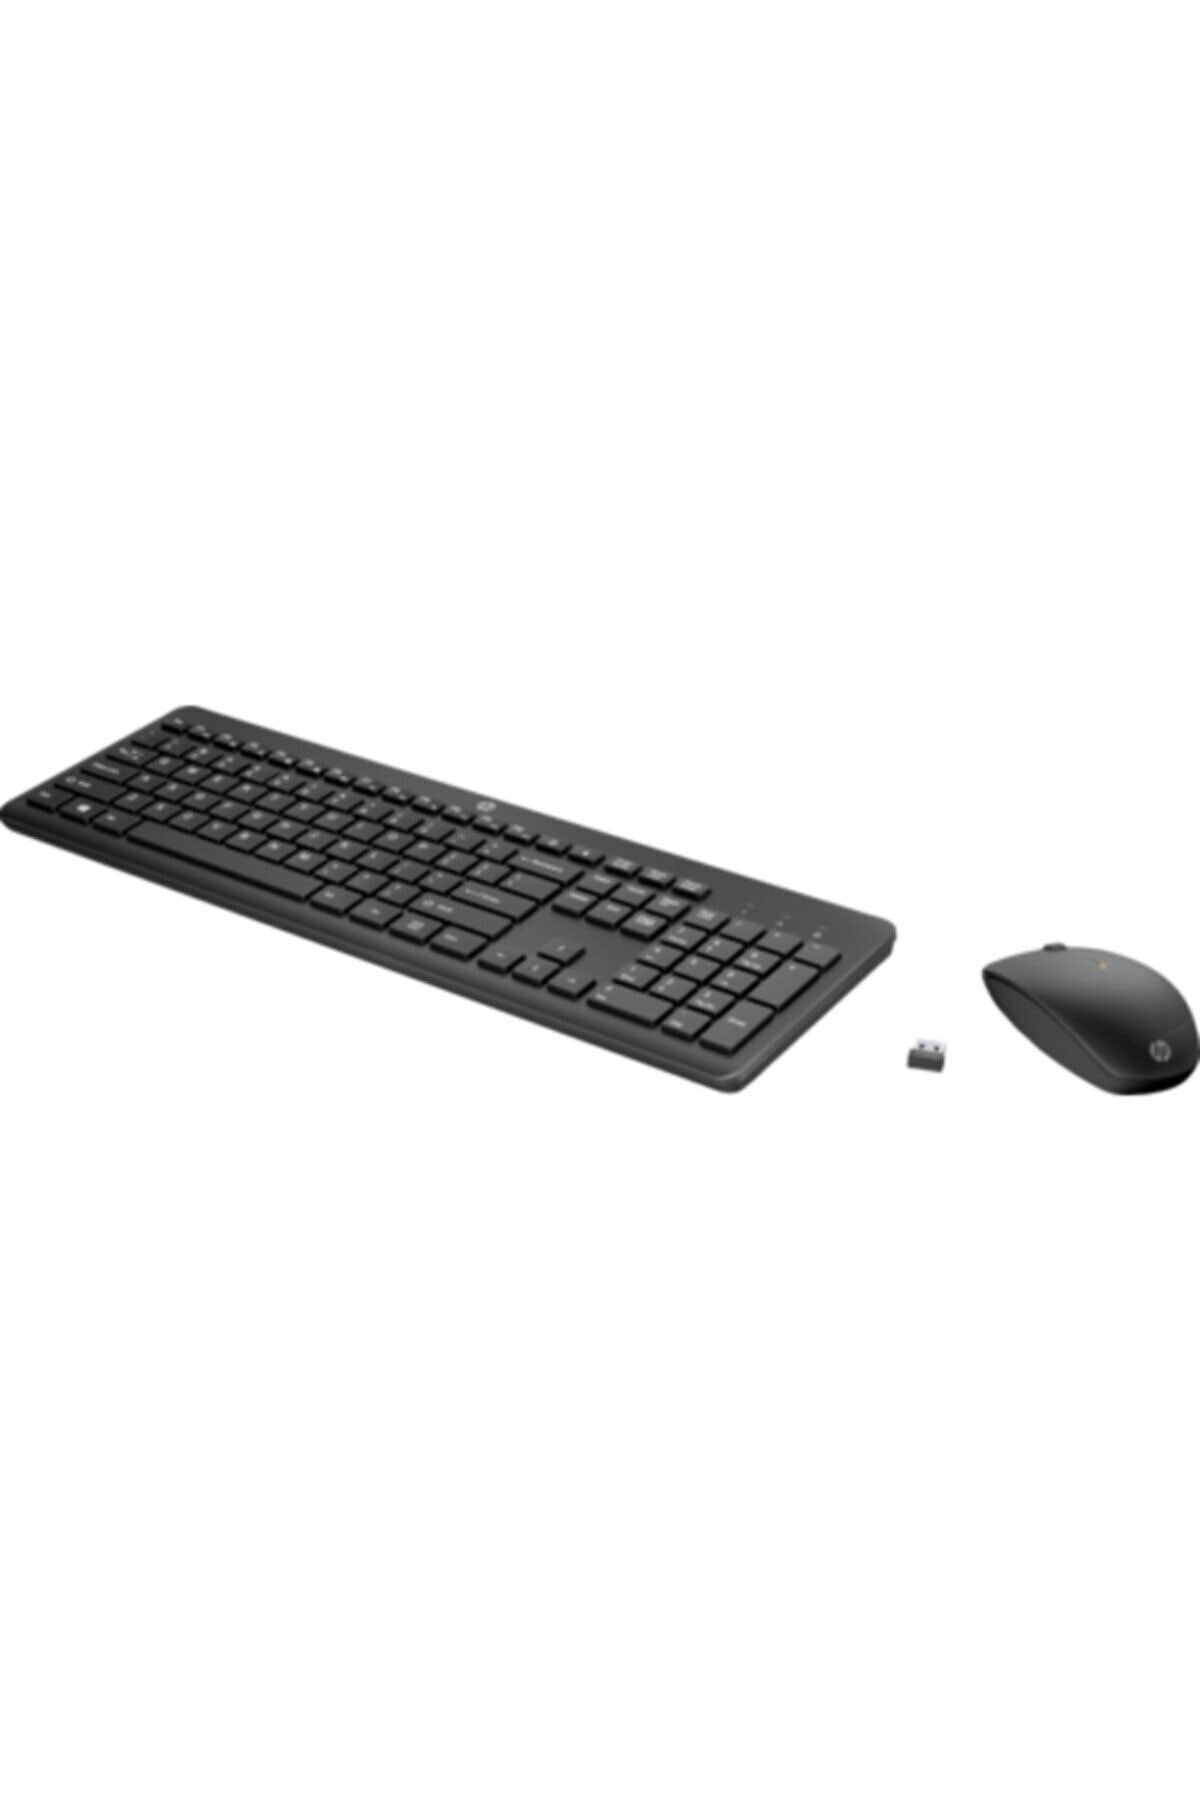 HP 18h24aa 230 Kablosuz Klavye & Mouse Kombo Set - Siyah (türkçe)